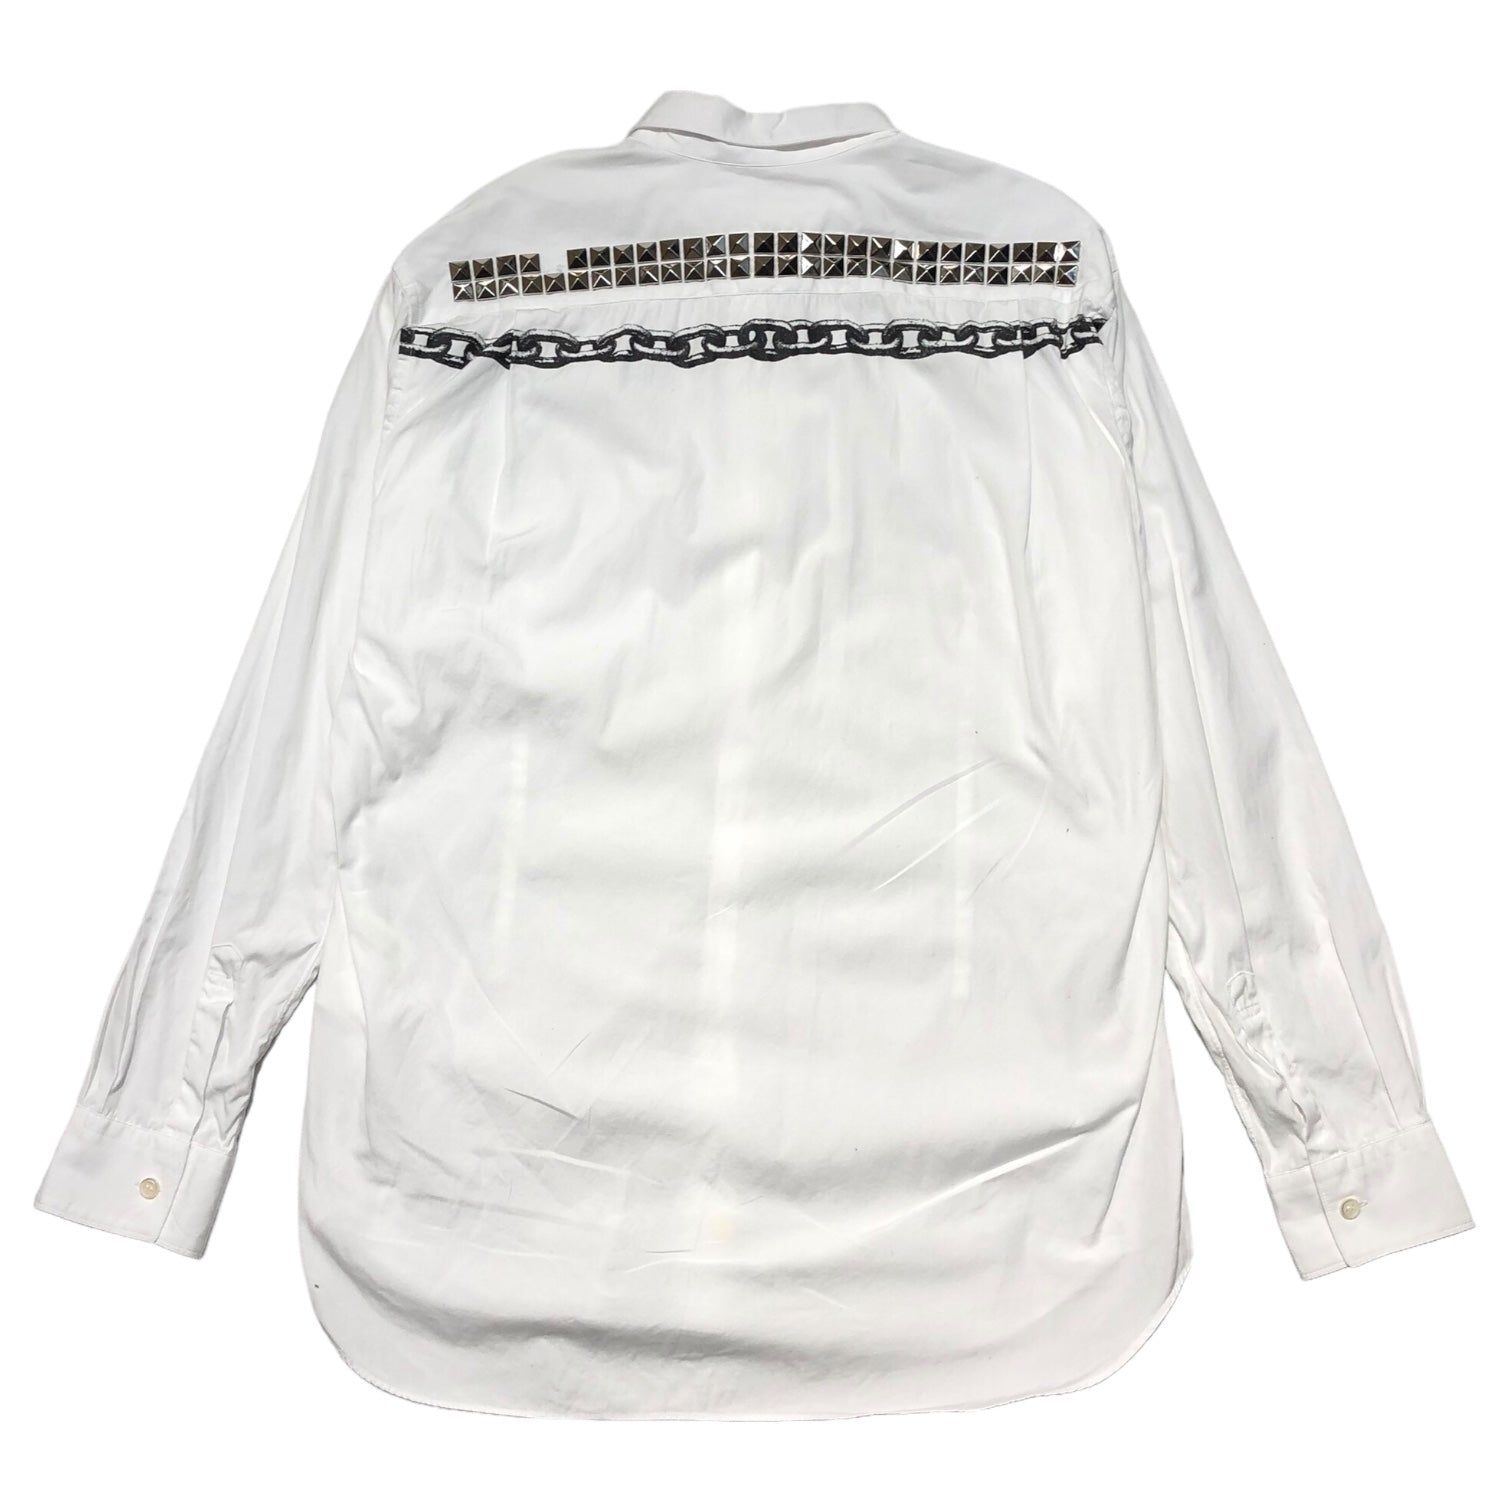 COMME des GARCONS SHIRT(コムデギャルソンシャツ) studded chain print shirt/スタッズ装飾チェーンプリントシャツ FF-B107 S ホワイト×ブラック×シルバー